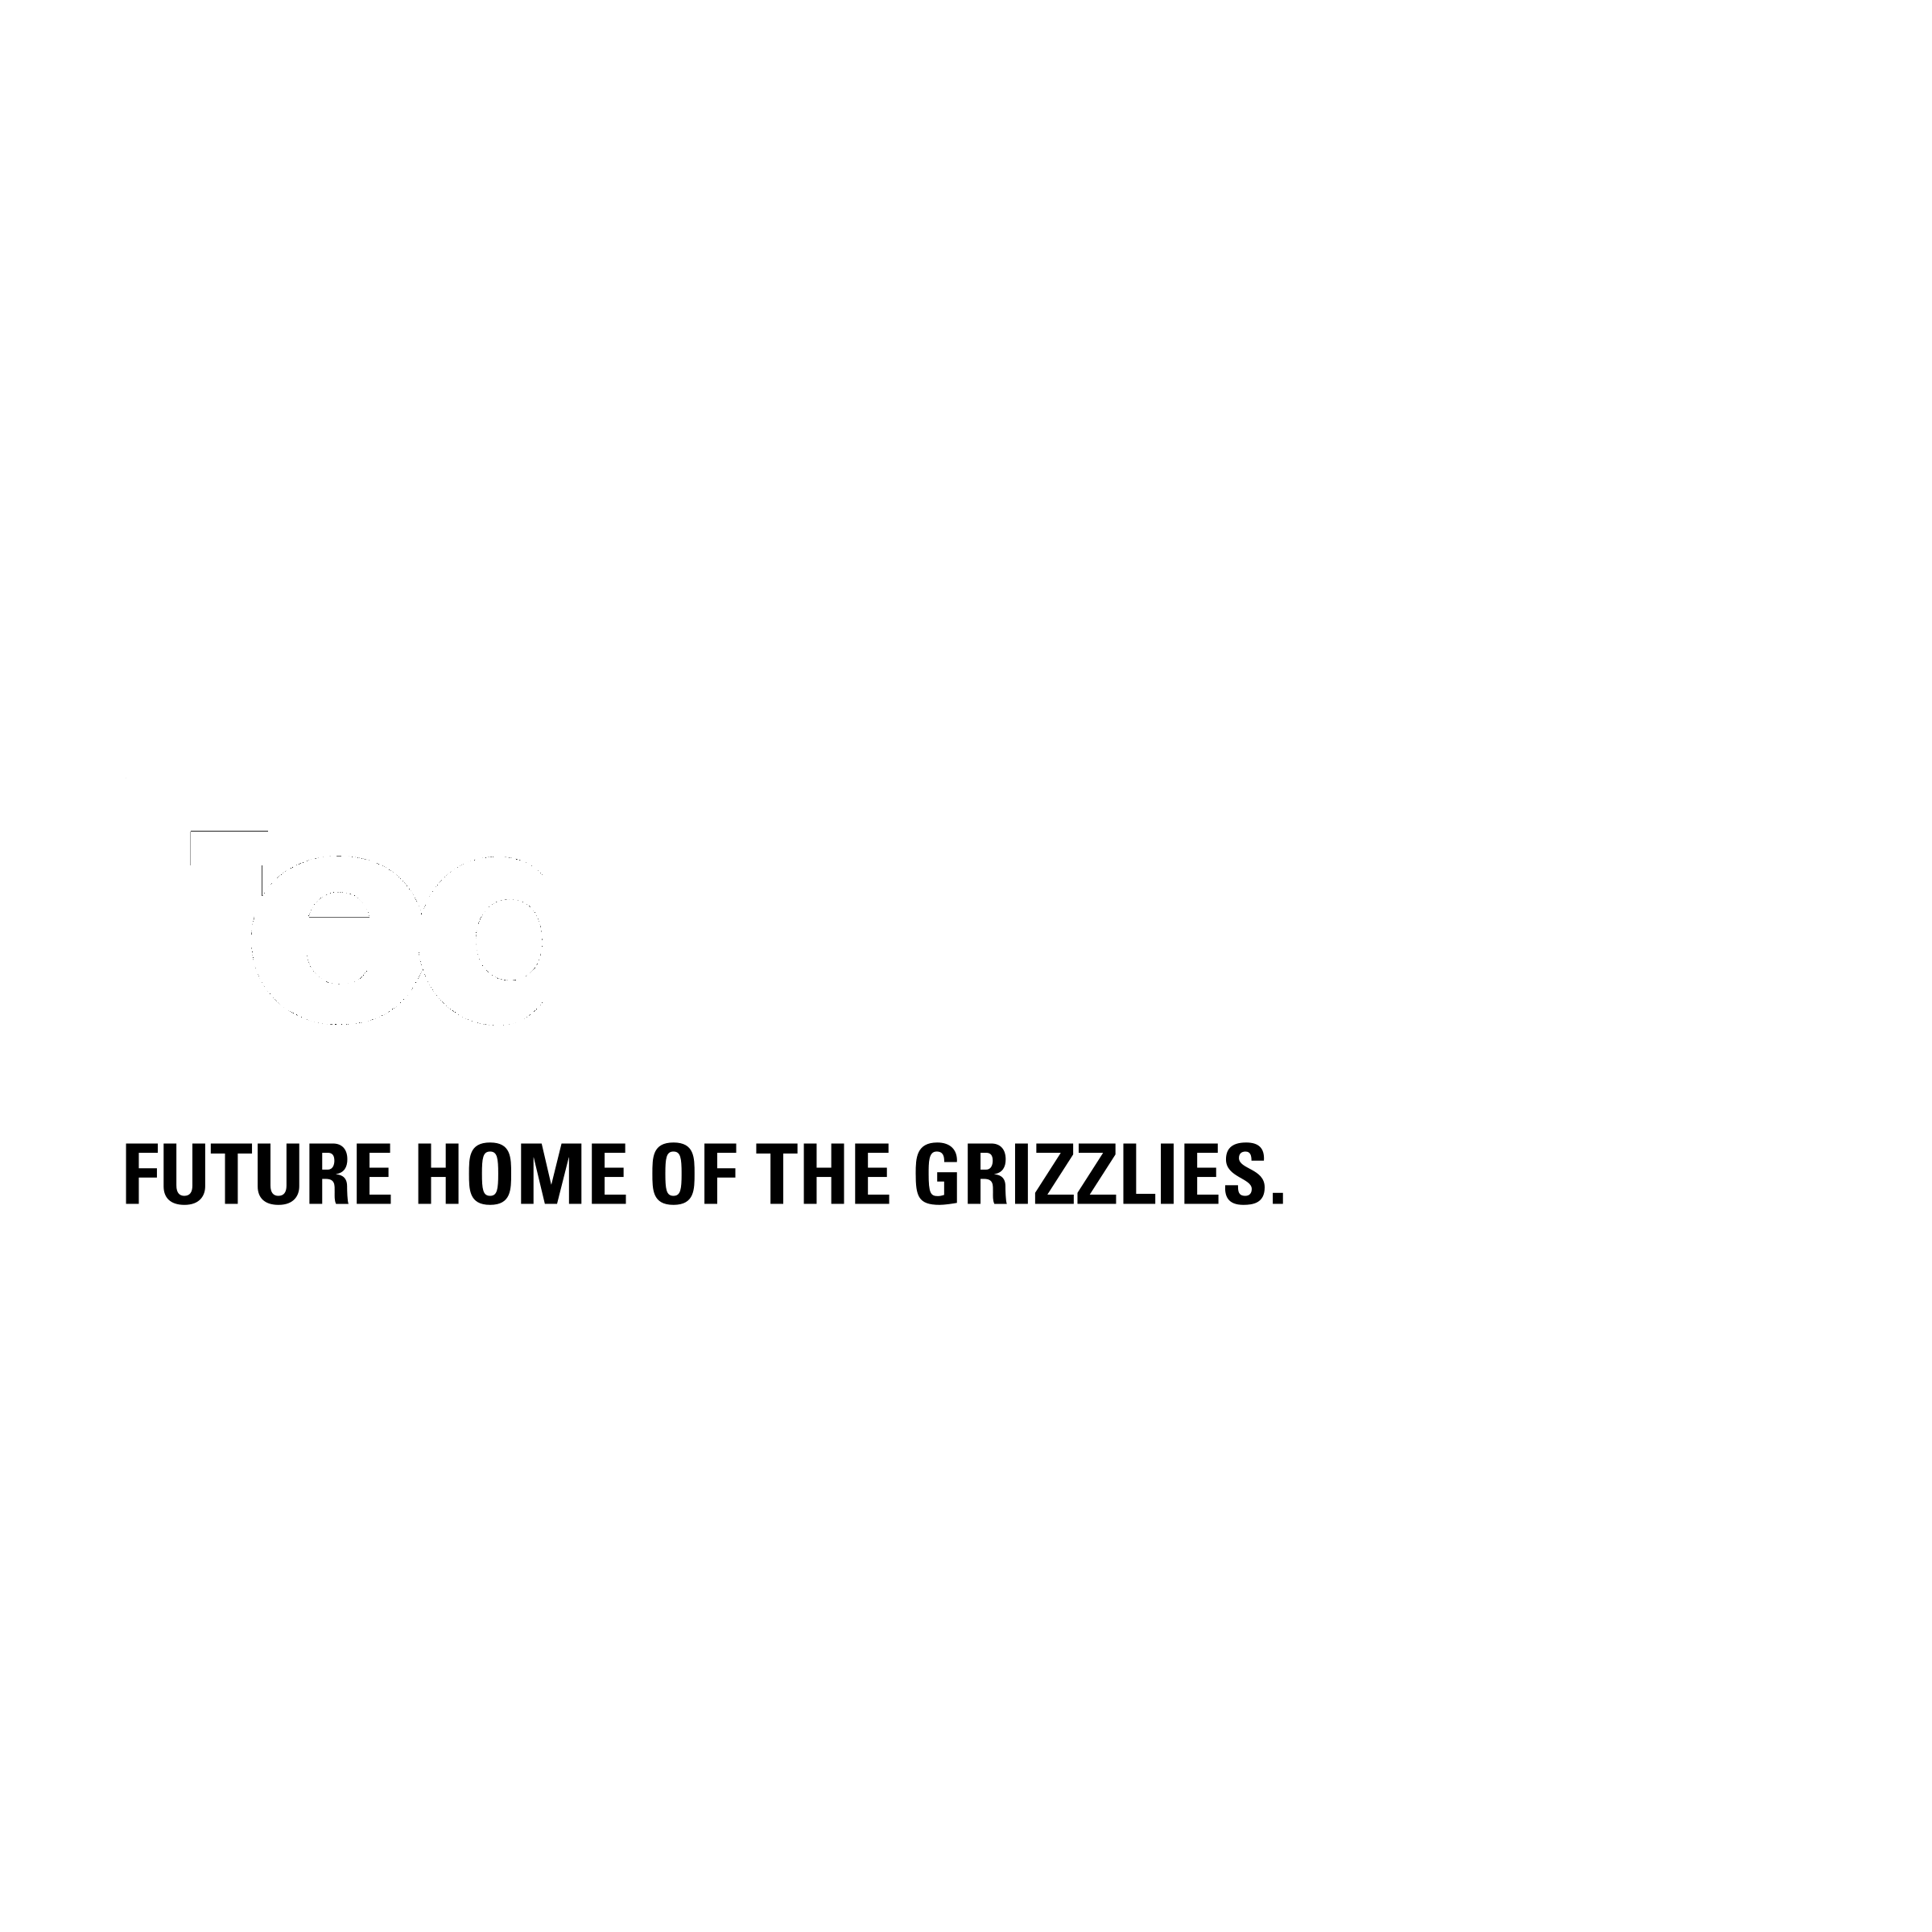 FedExForum Logo - FedExForum Logo PNG Transparent & SVG Vector